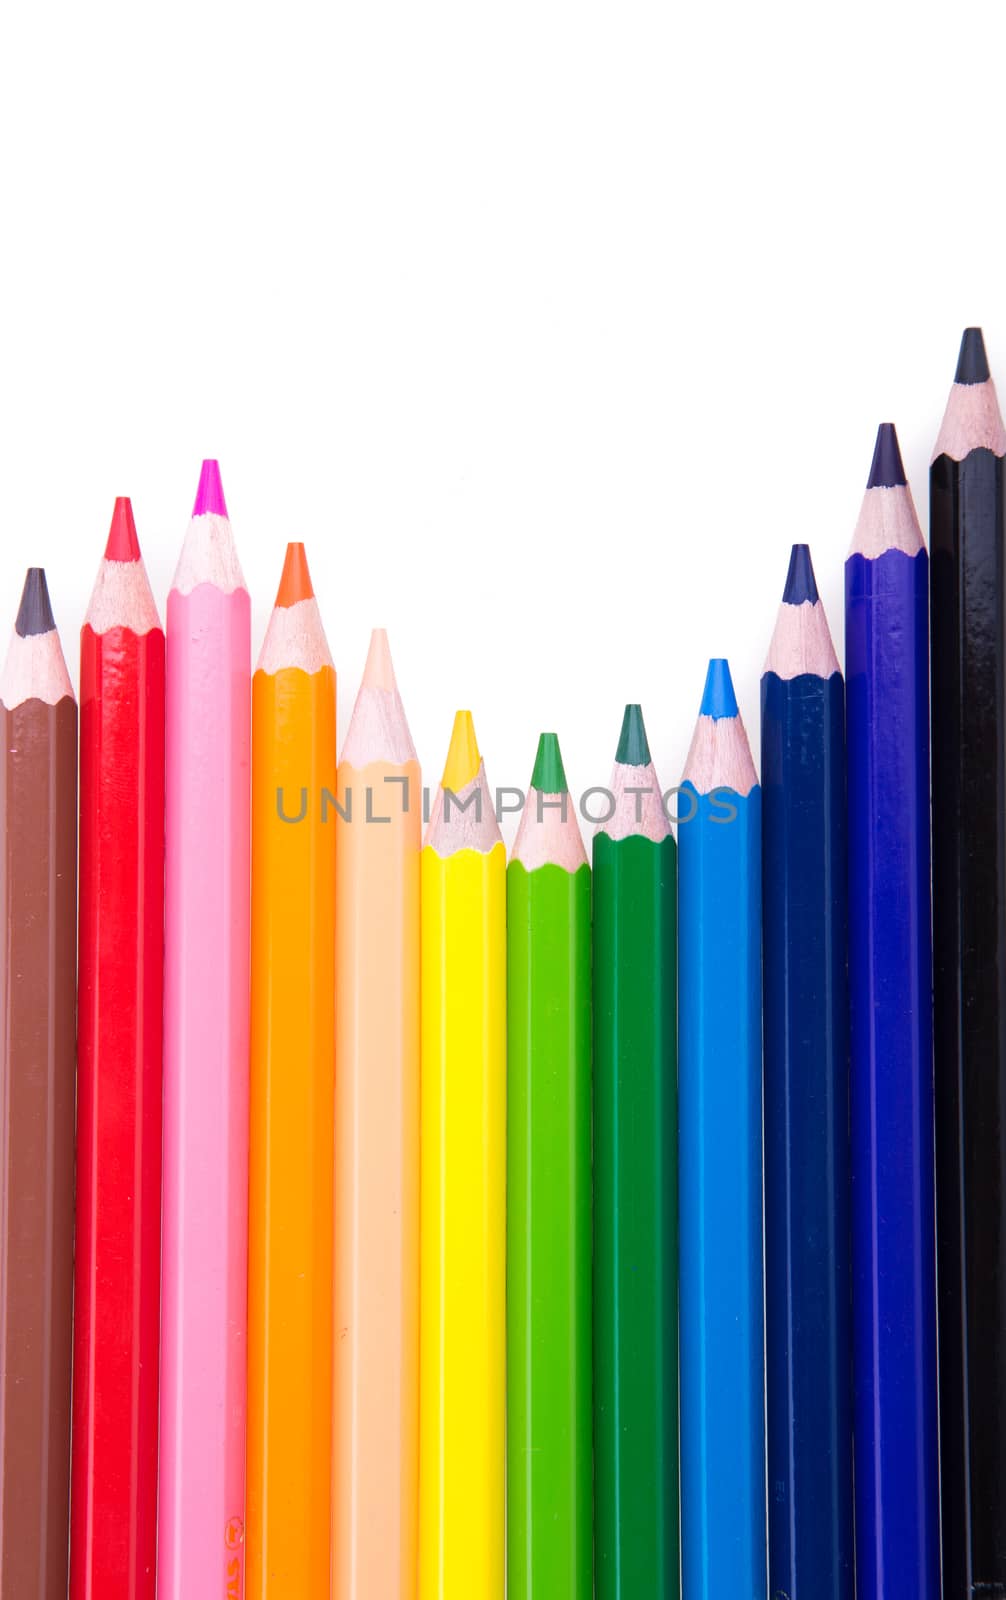 Colour pencils by tehcheesiong